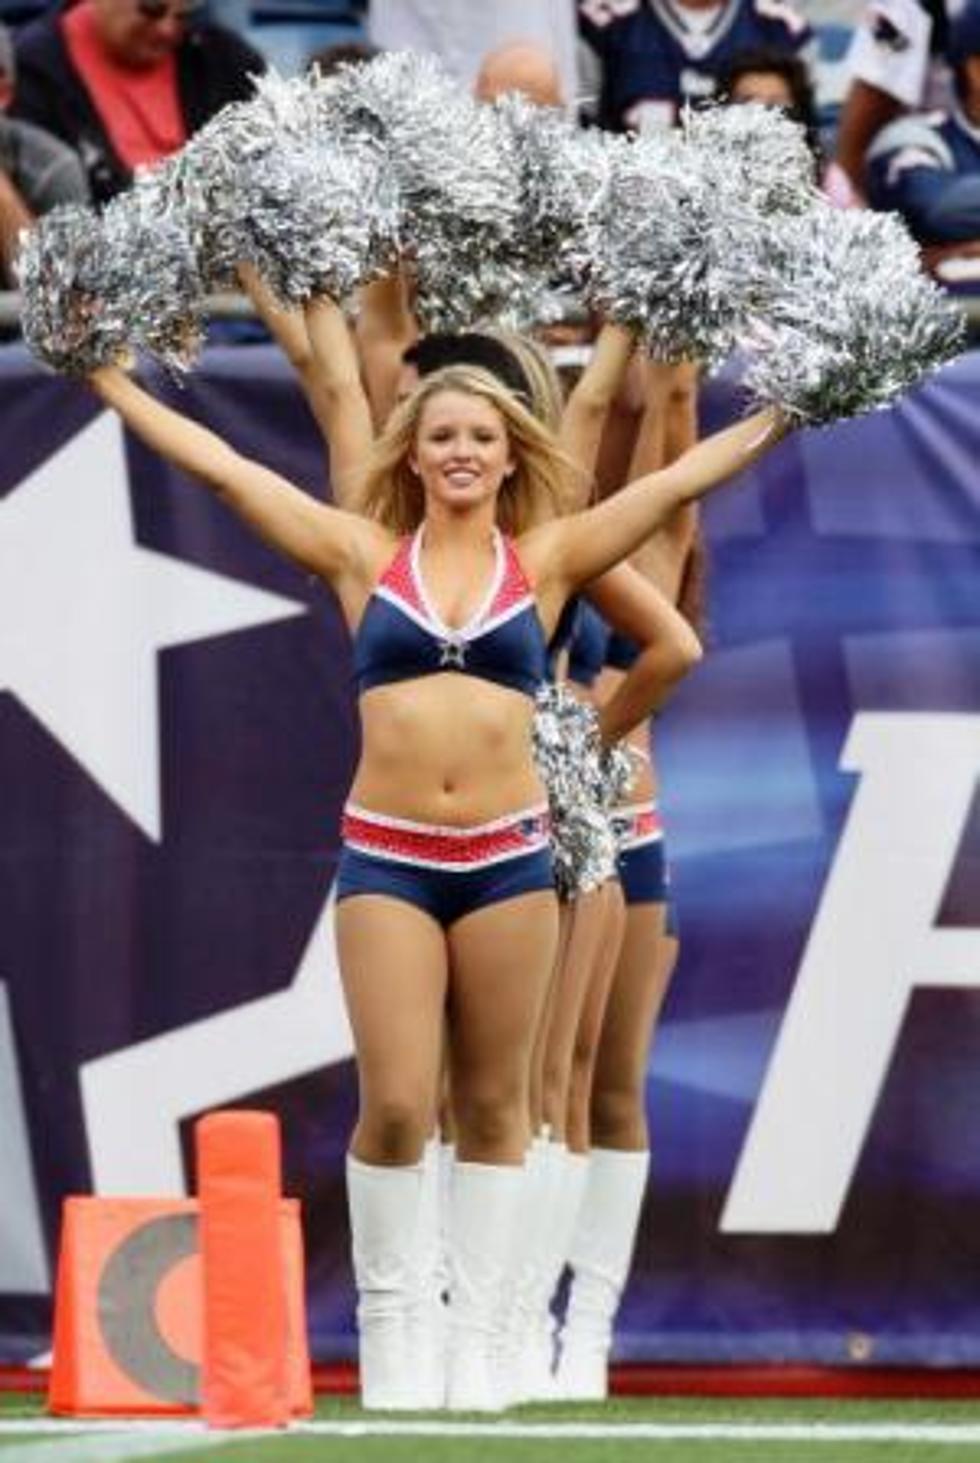 Doug Flutie’s Daughter A Cheerleader For The Patriots [VIDEO]